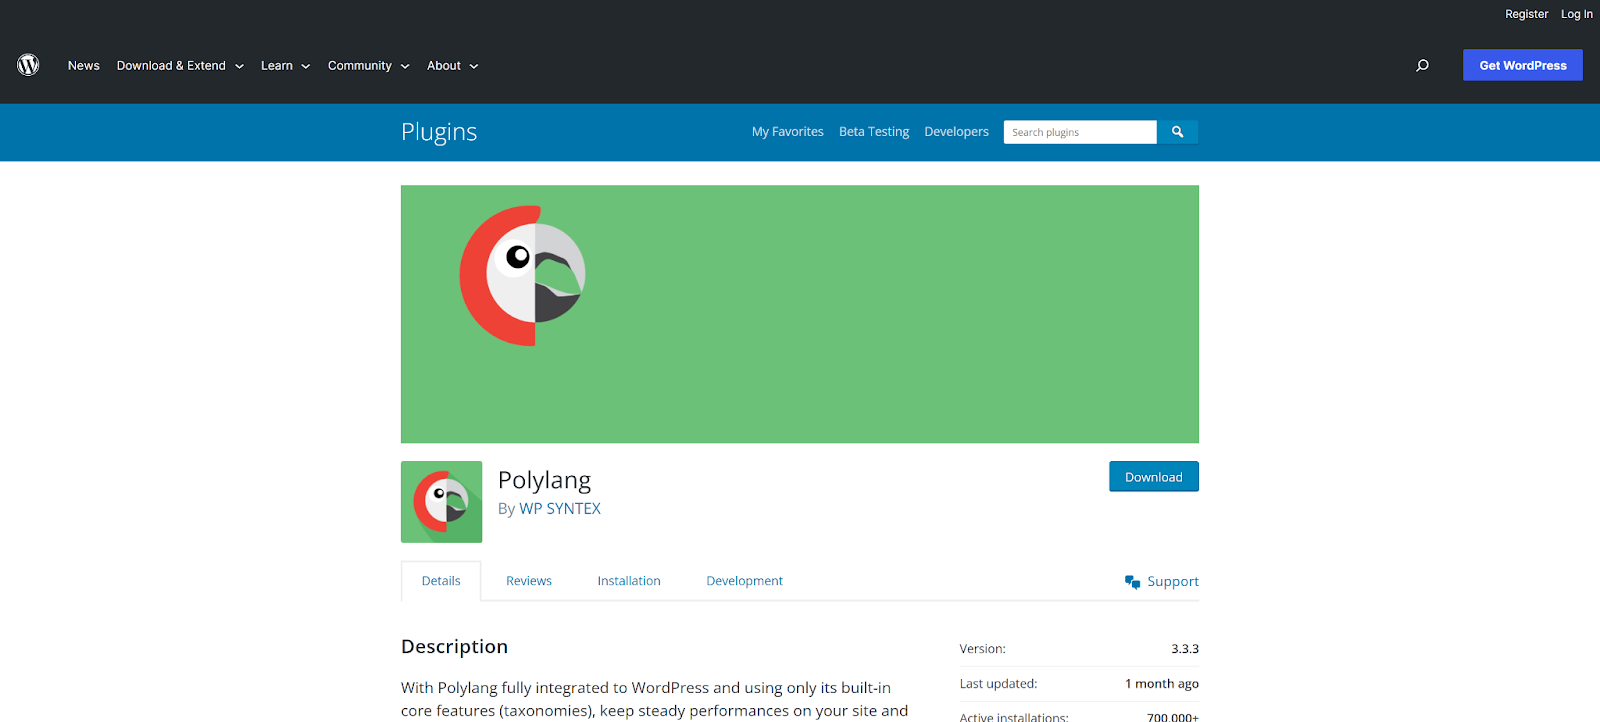 Polylang plugin in the WordPress plugin library